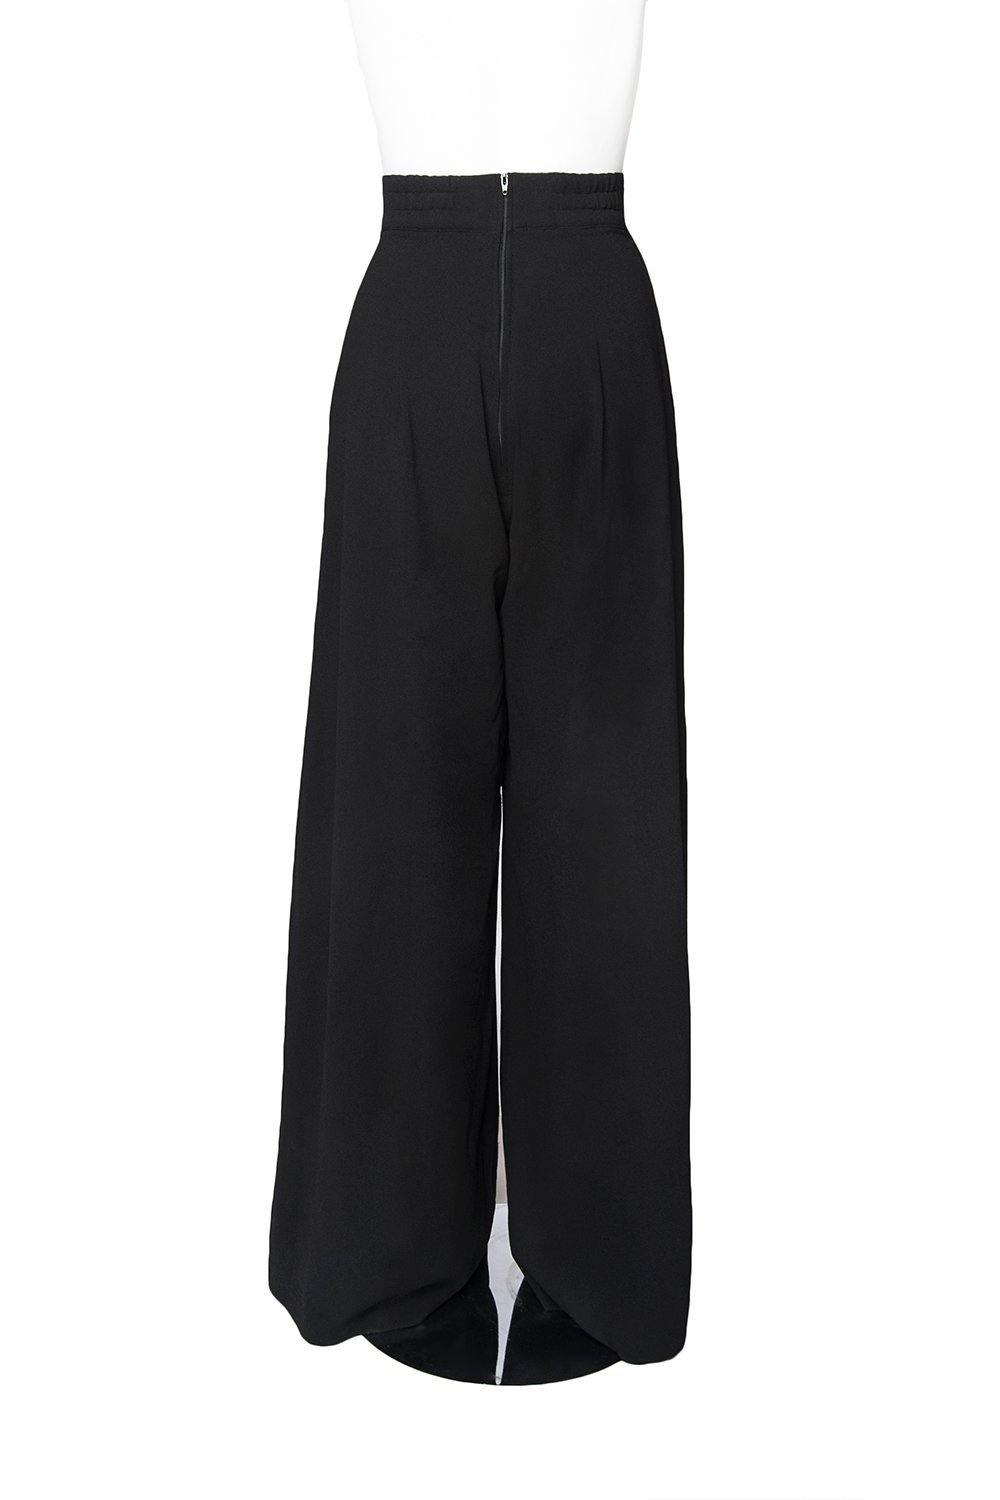 Laura Byrnes California Doris Pants in Black with 34" Inseam